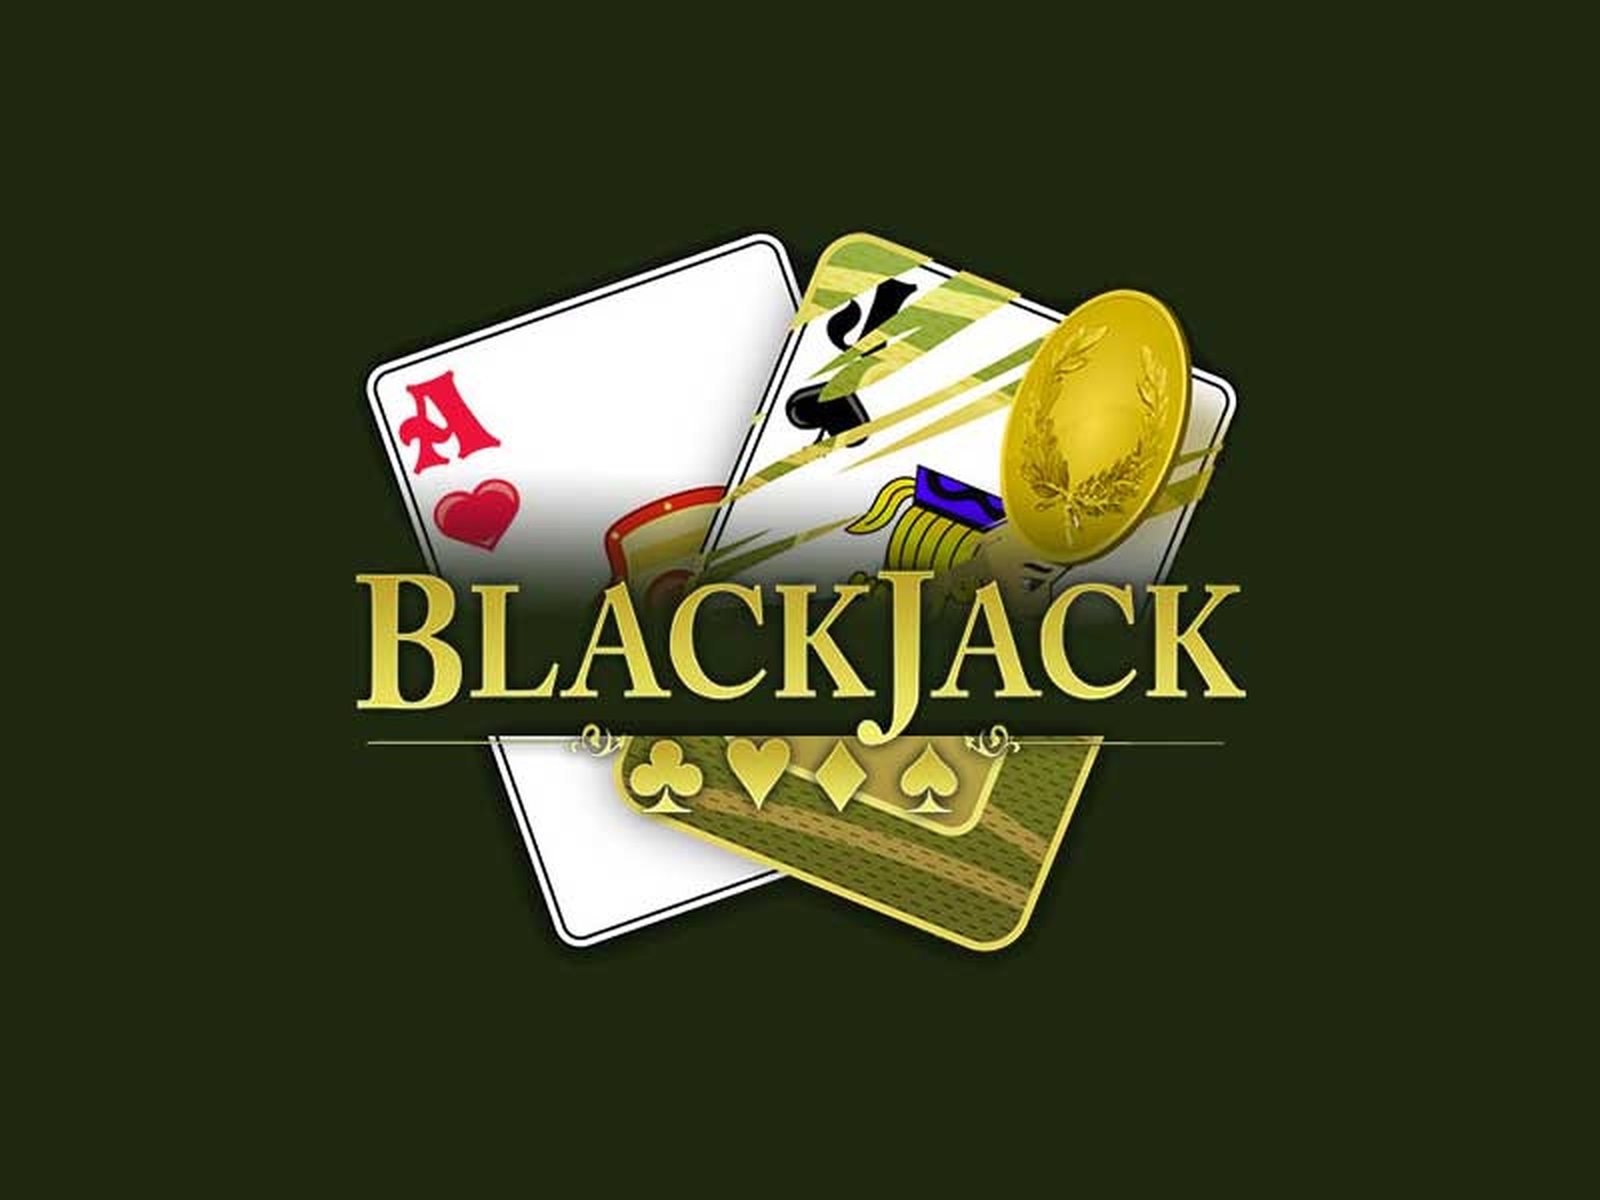 Blackjack Scratch demo